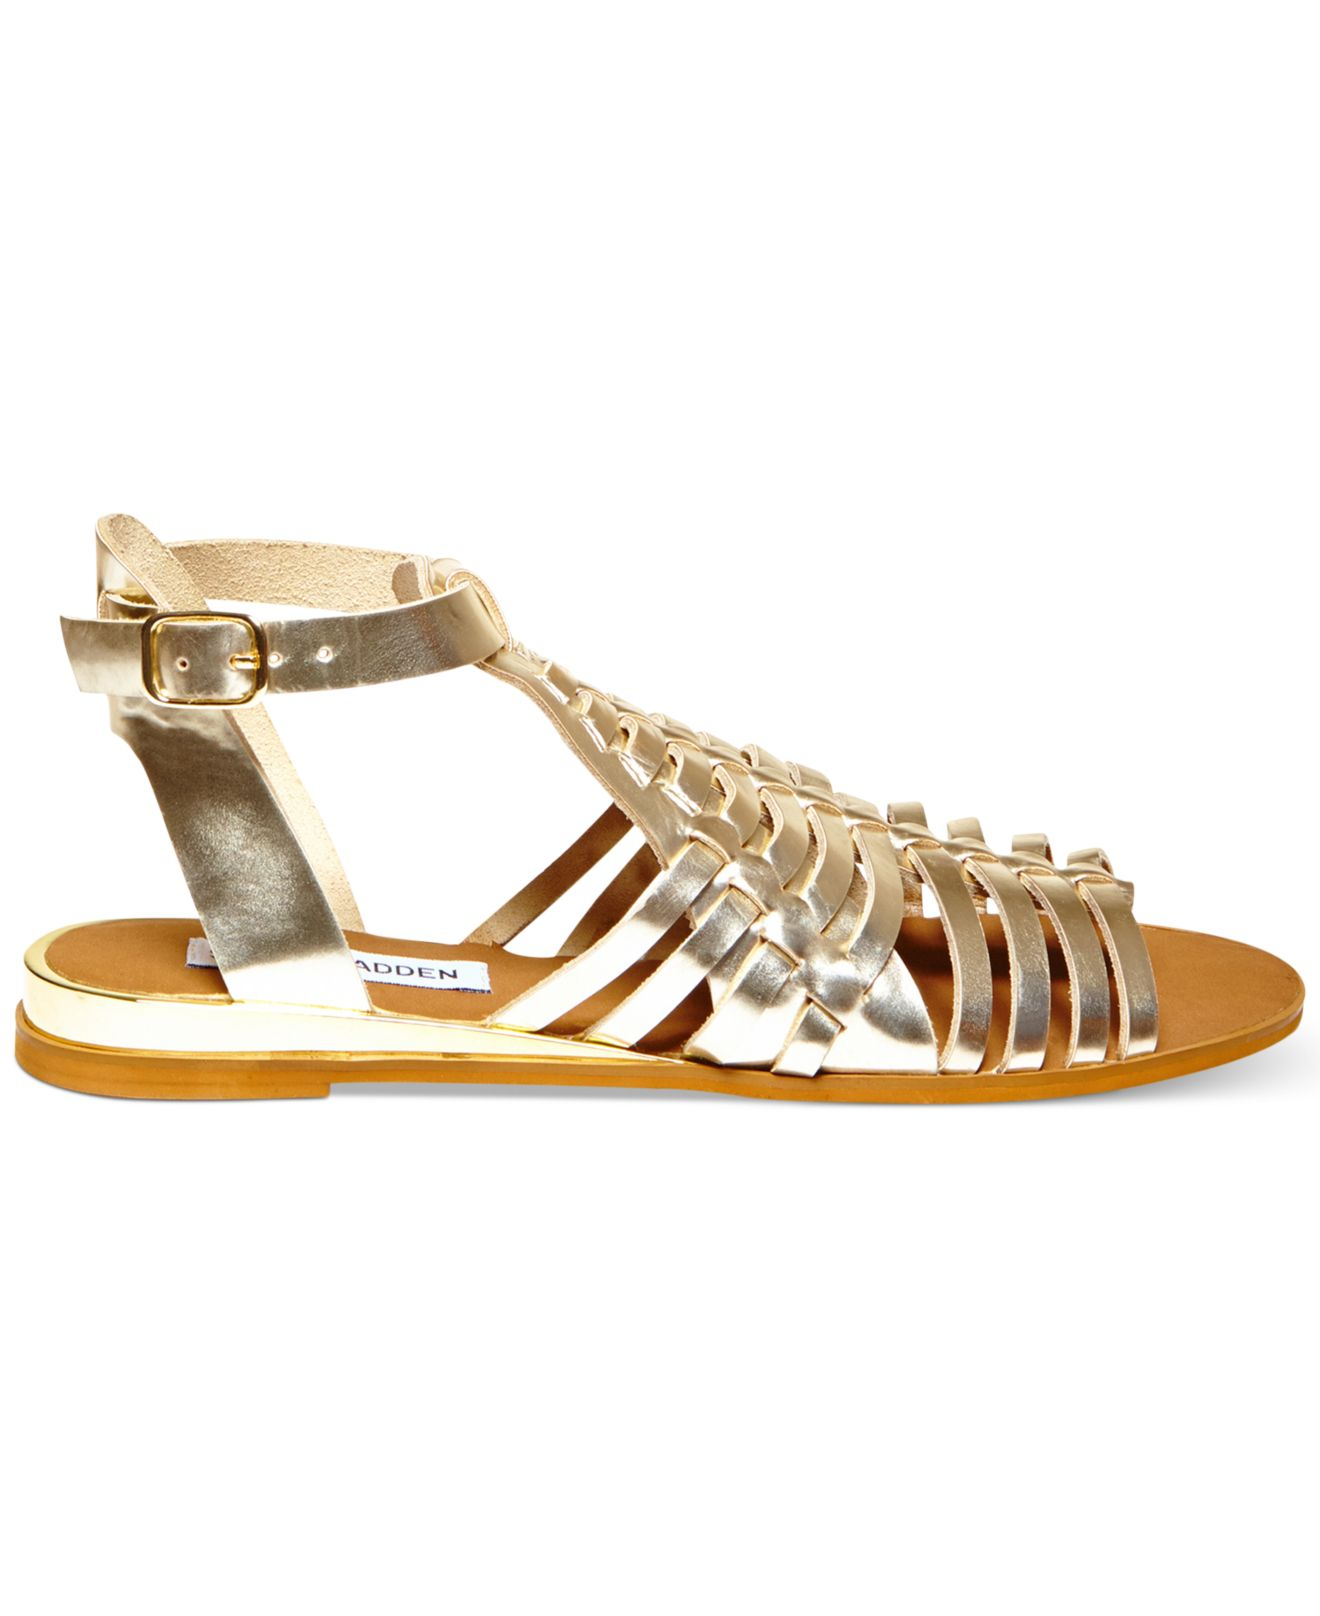 Lyst Steve Madden Women S Comely Flat Gladiator Sandals In Metallic